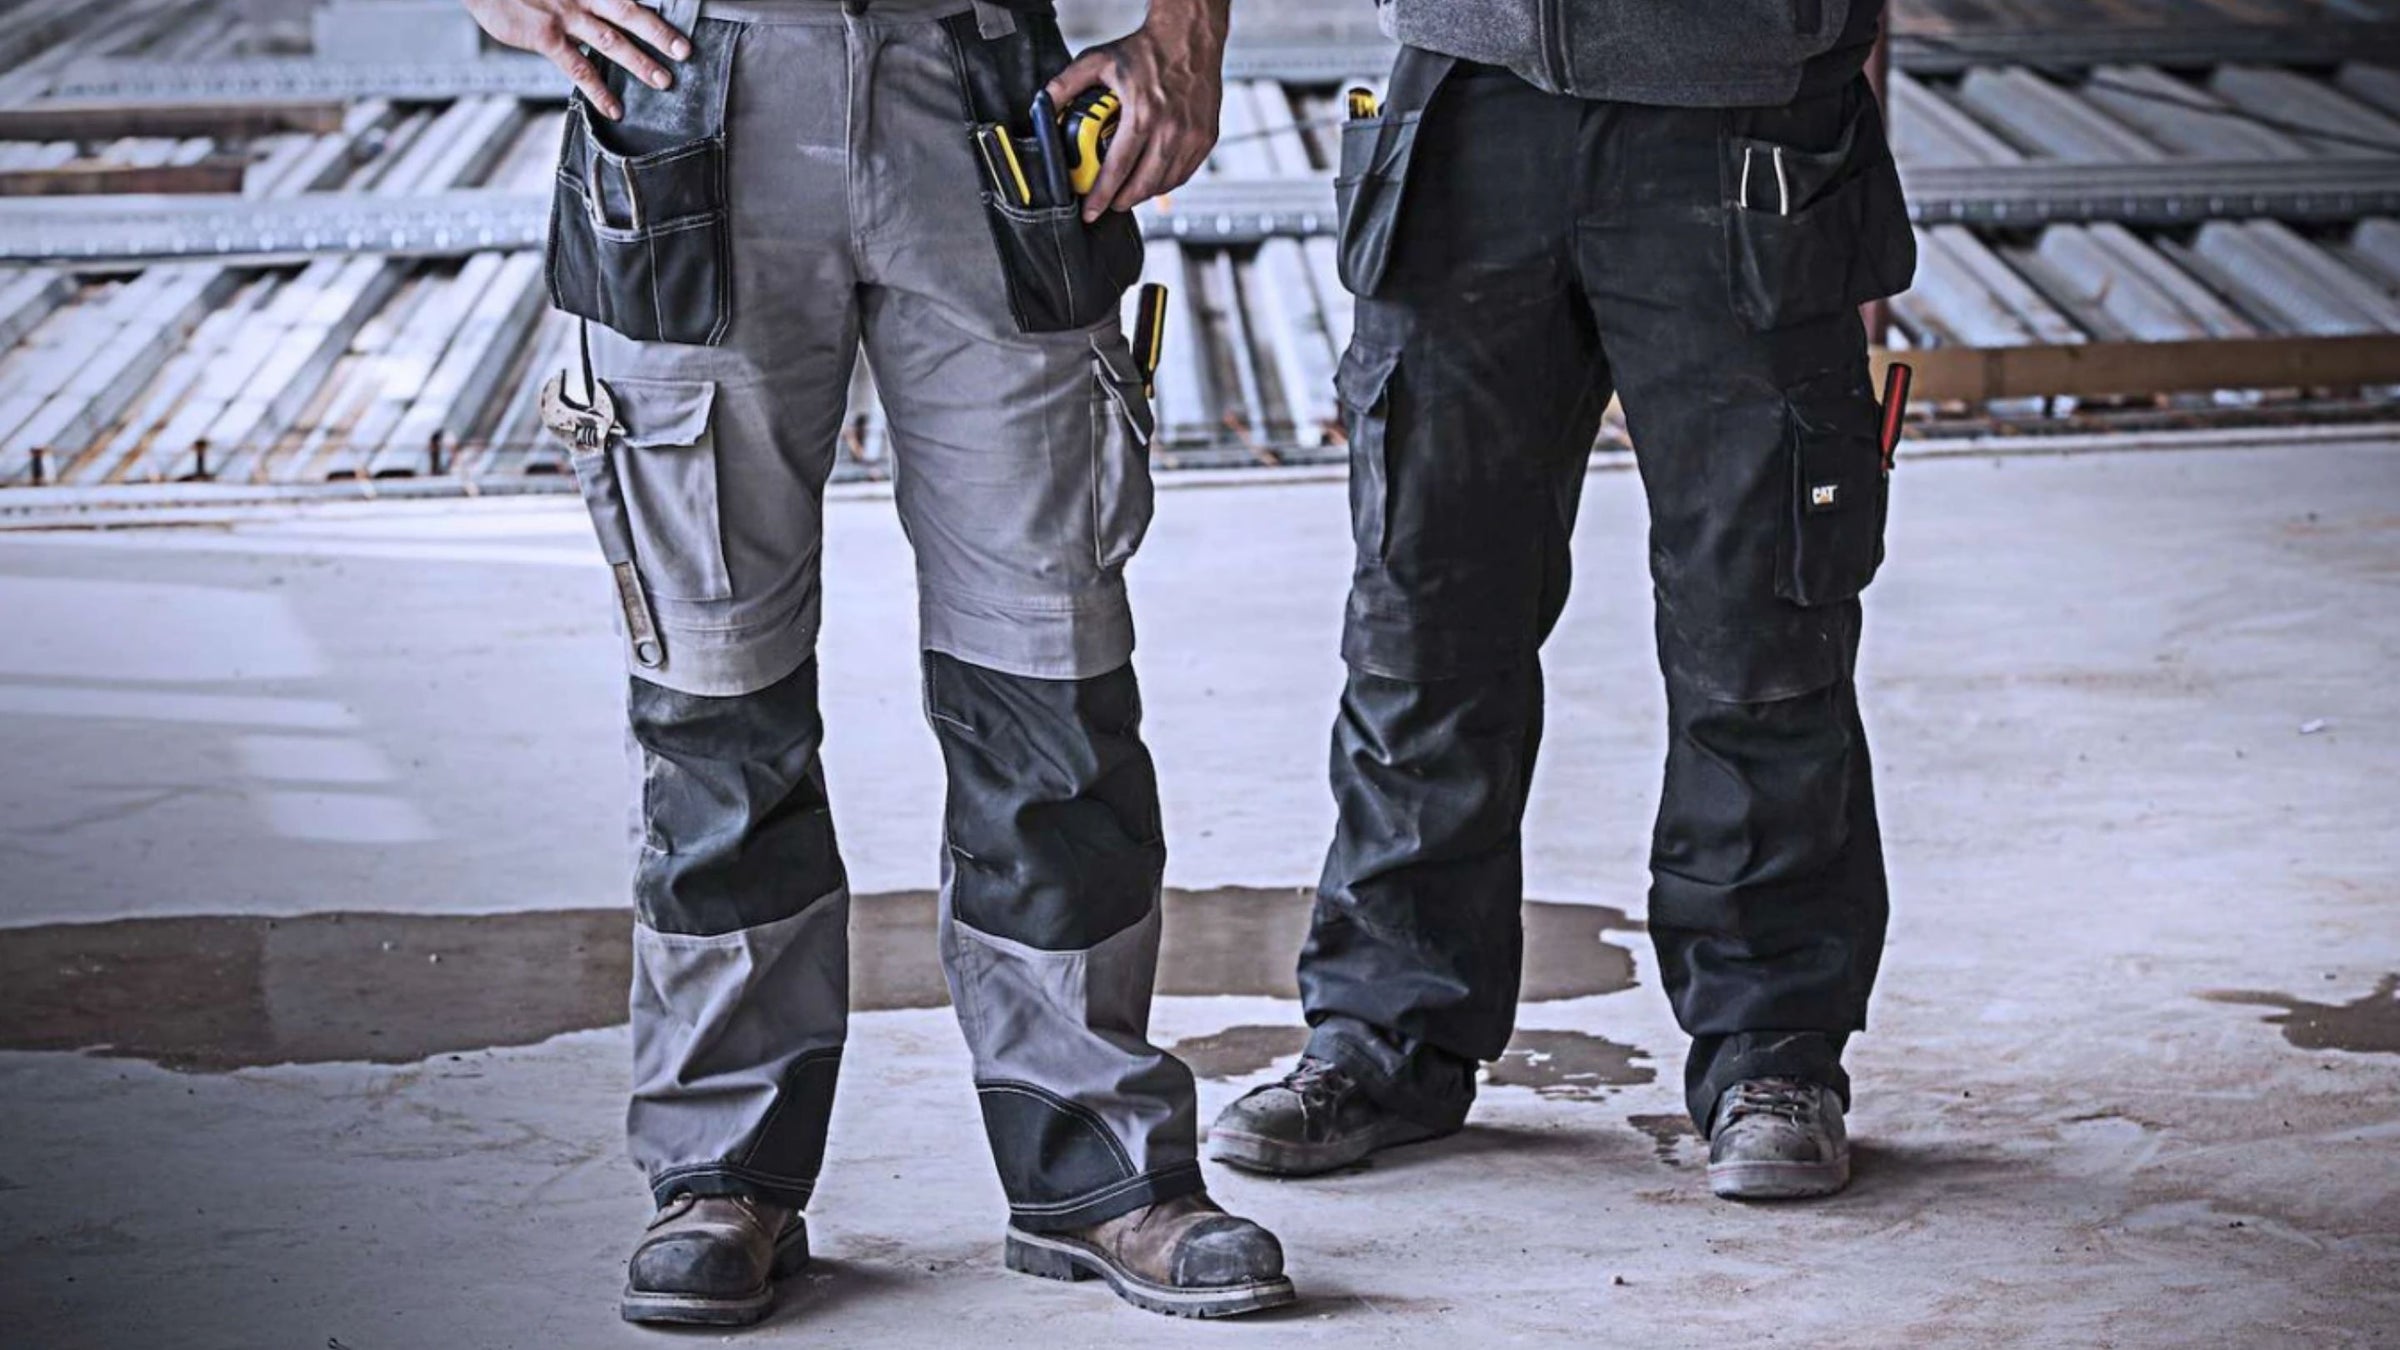 Navy Cotton Pants for Men with Reflectors Work Pants Men